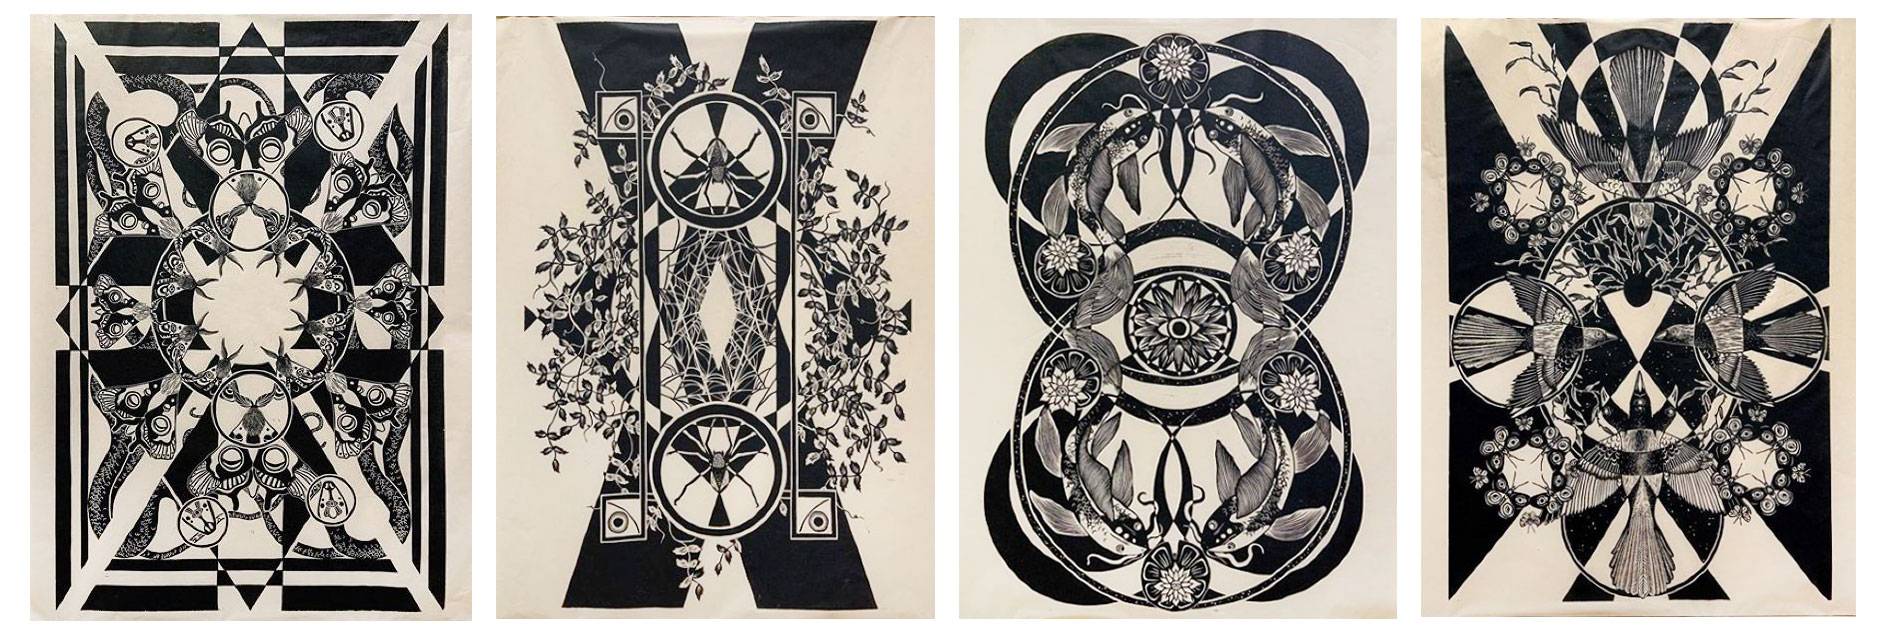 Four linoleum block prints by El Ronan, titled "Creation," "Devotion," "Reflection," and "Return."